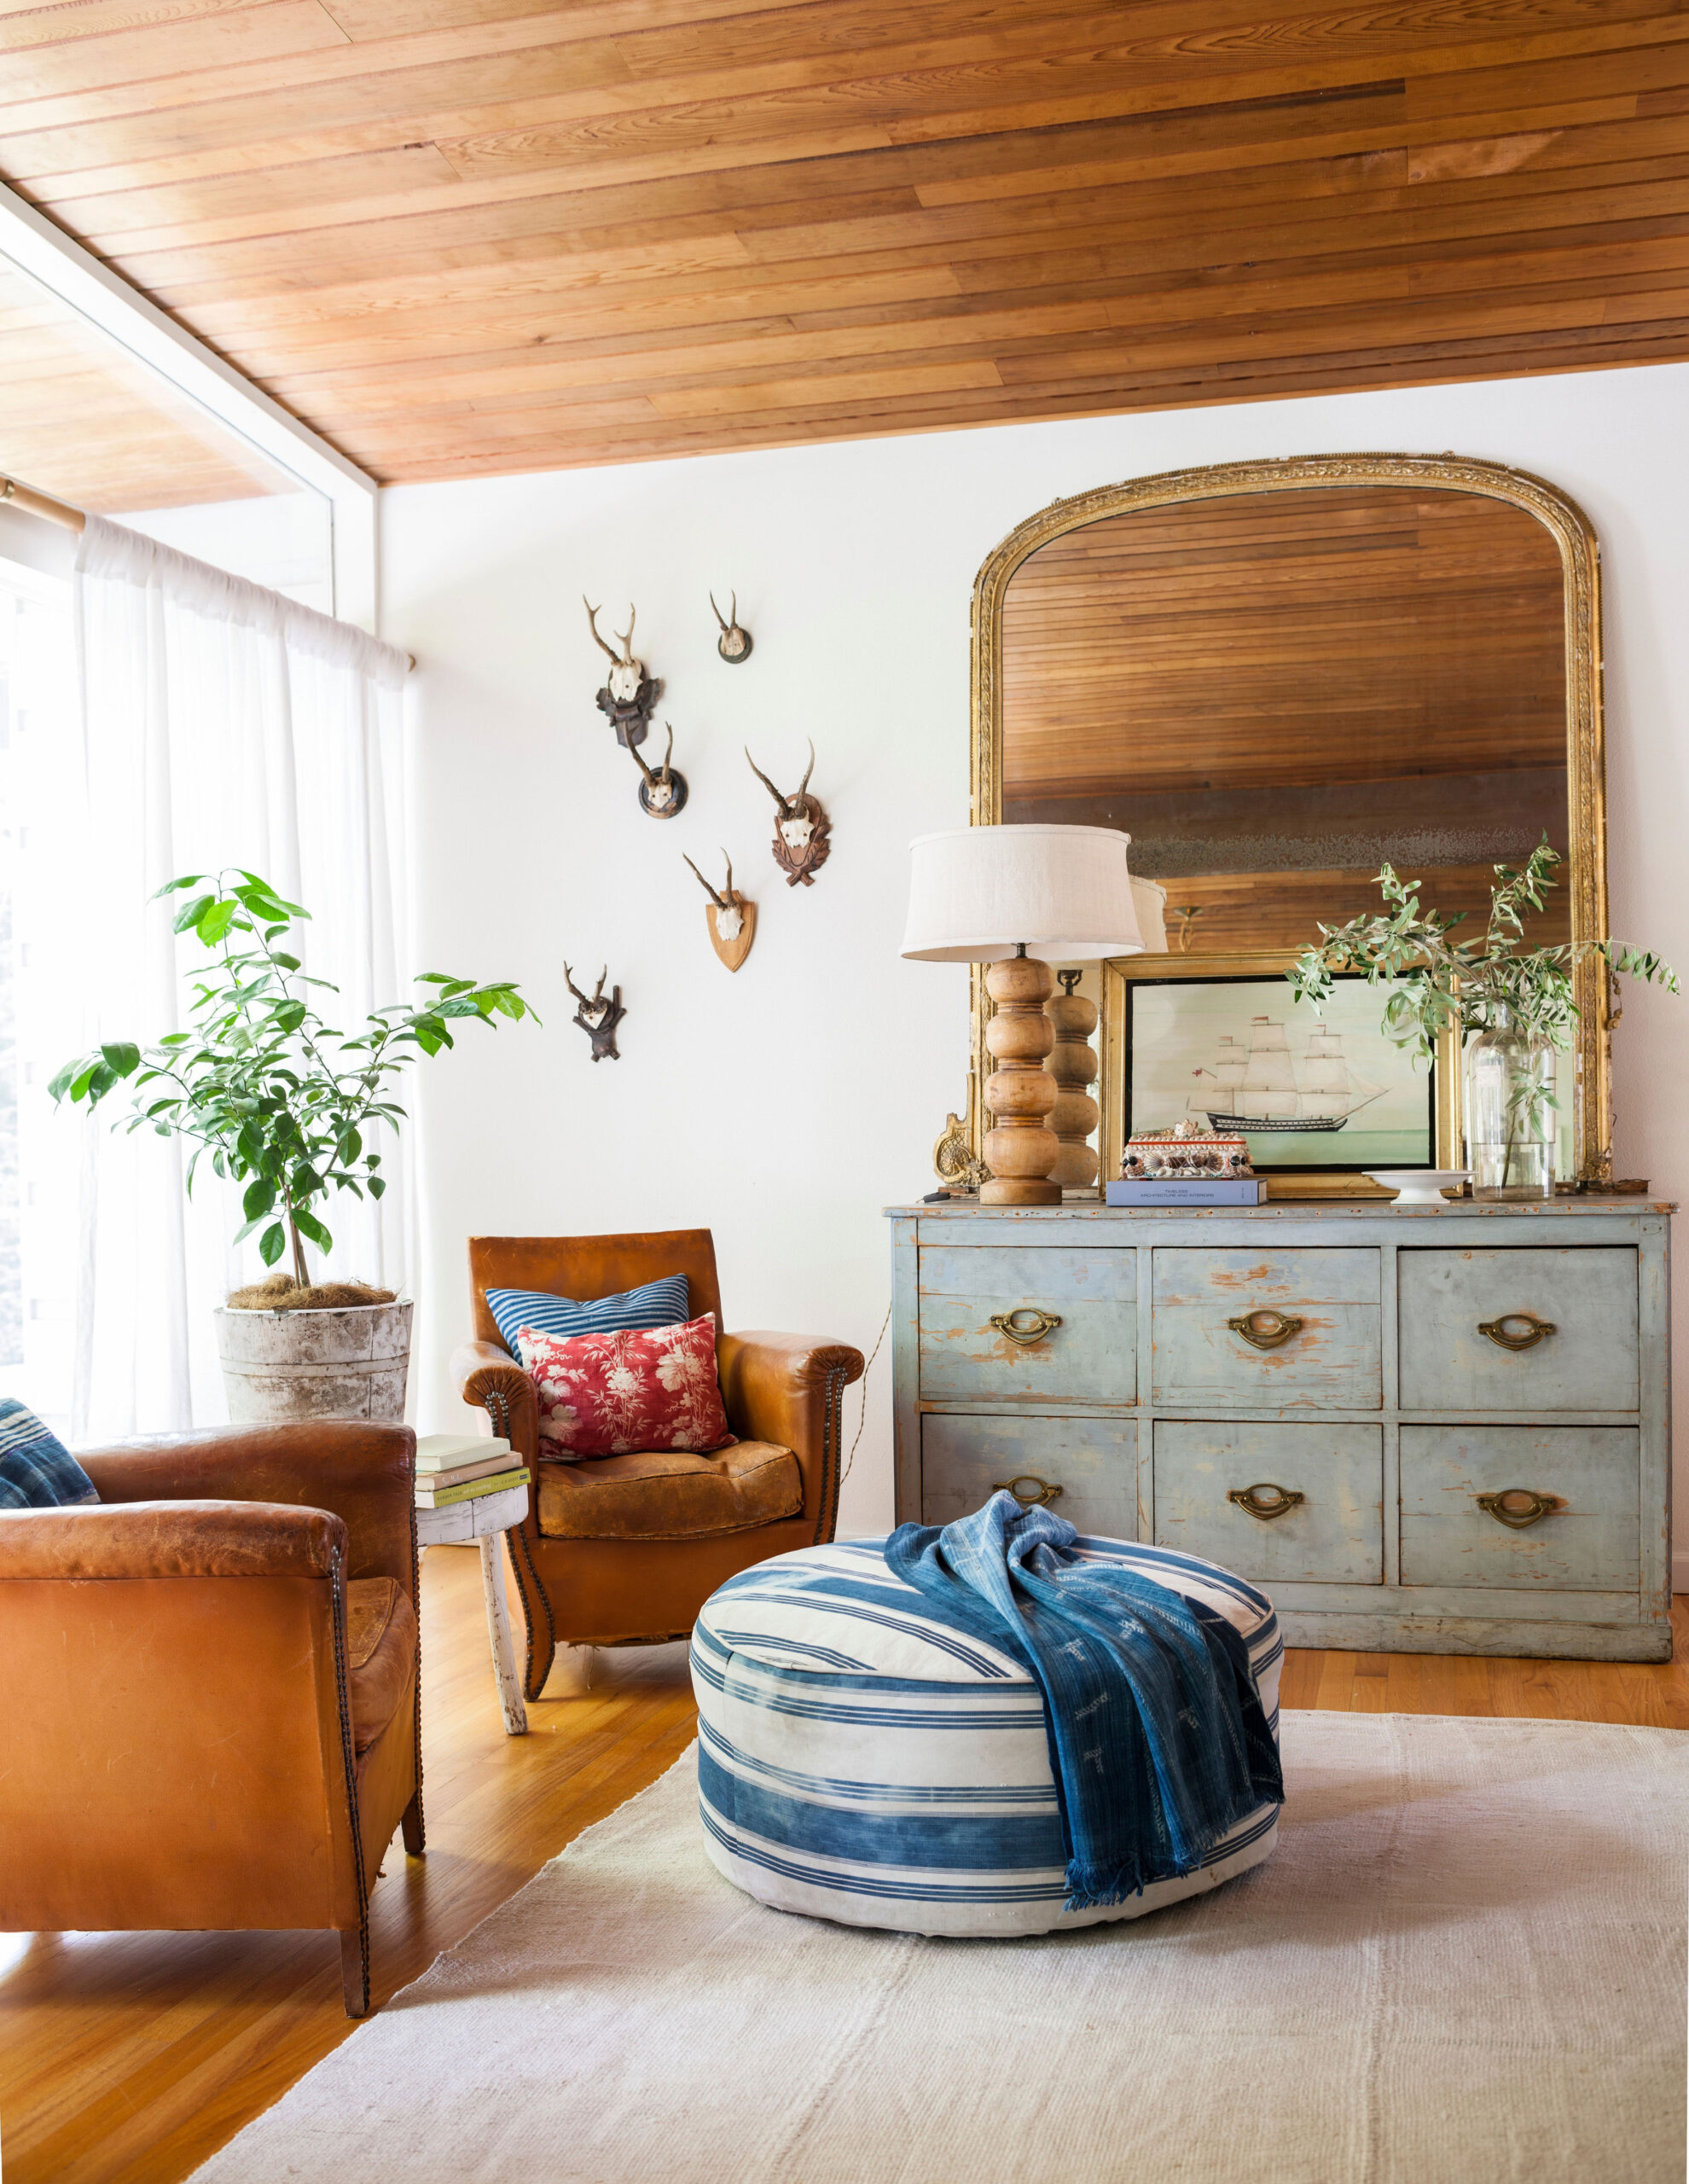 Living Room Ceiling Ideas to Transform Your Home